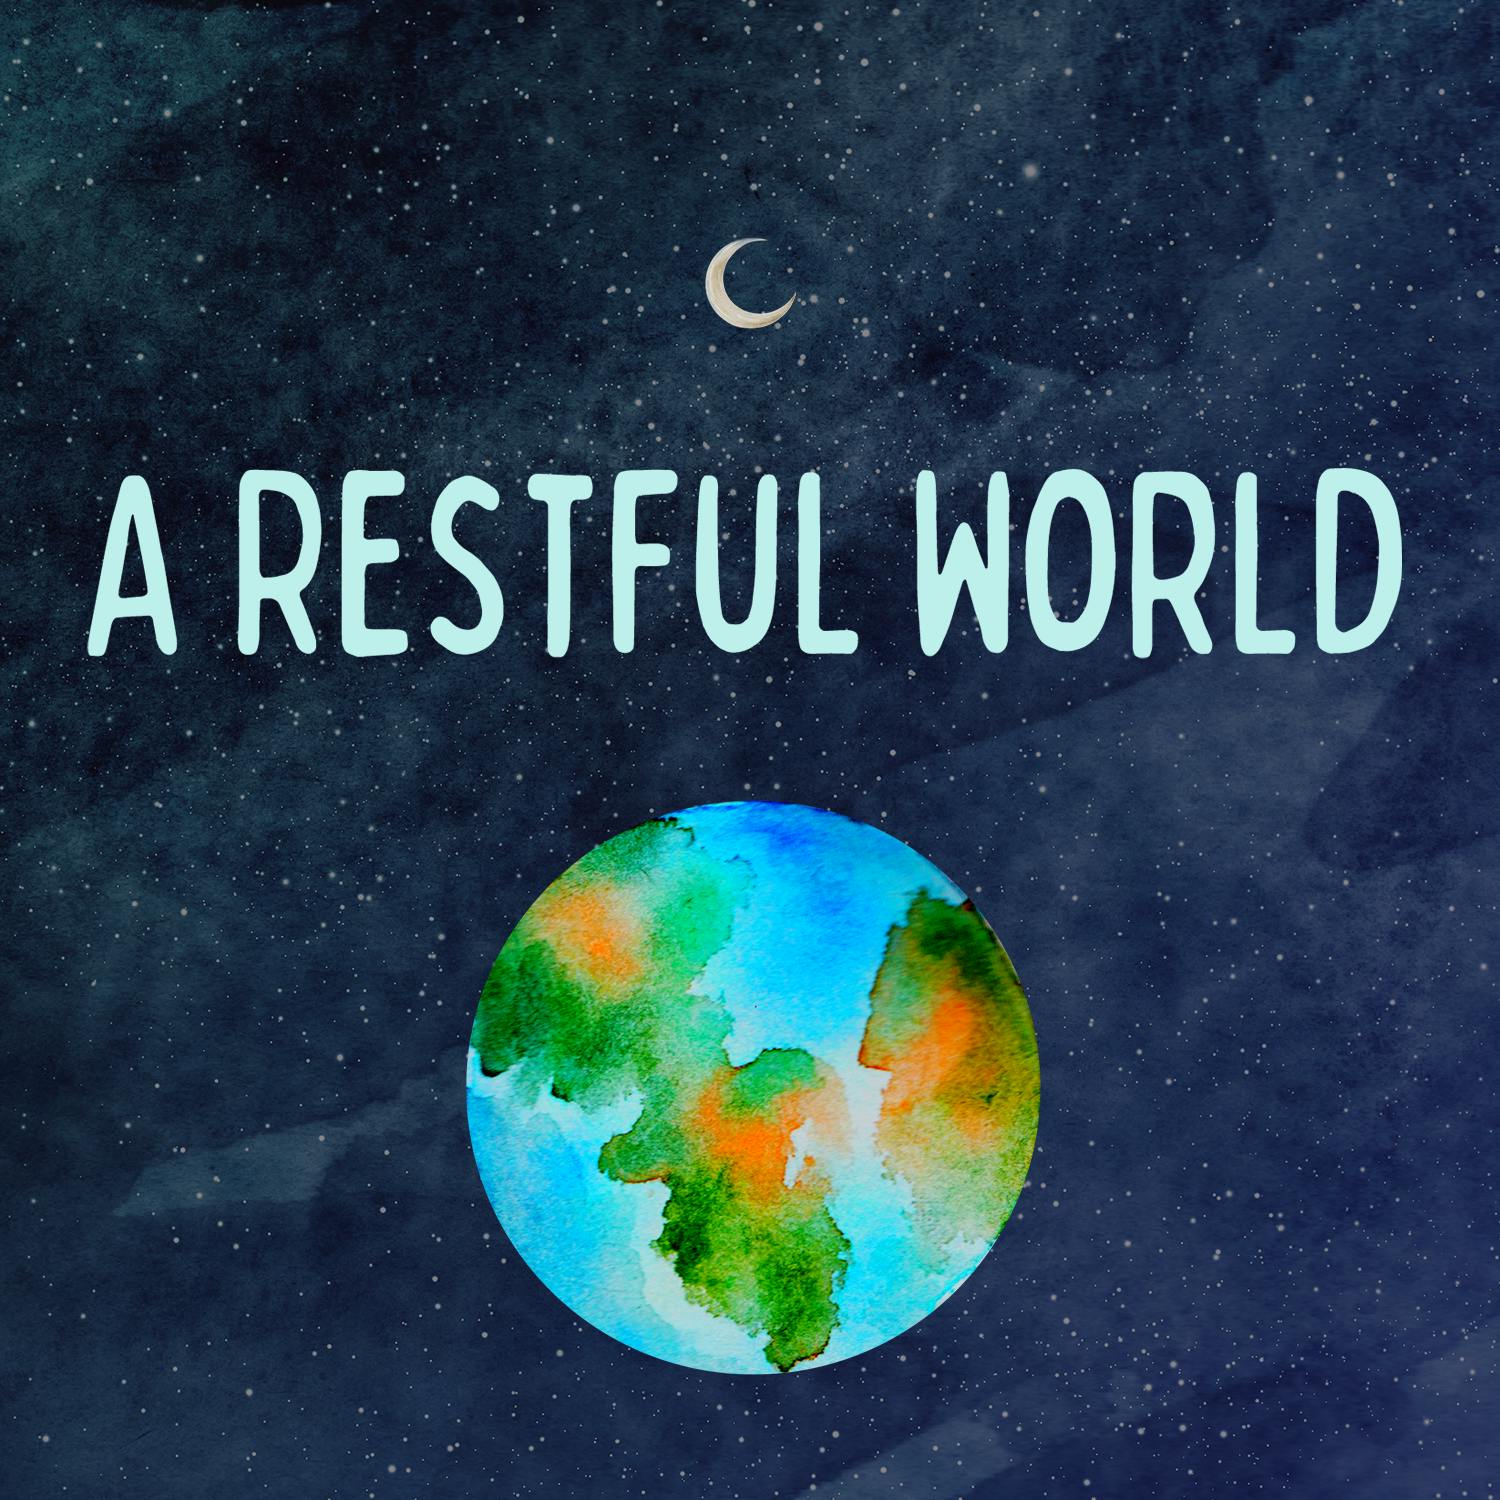 A Restful World (bonus)